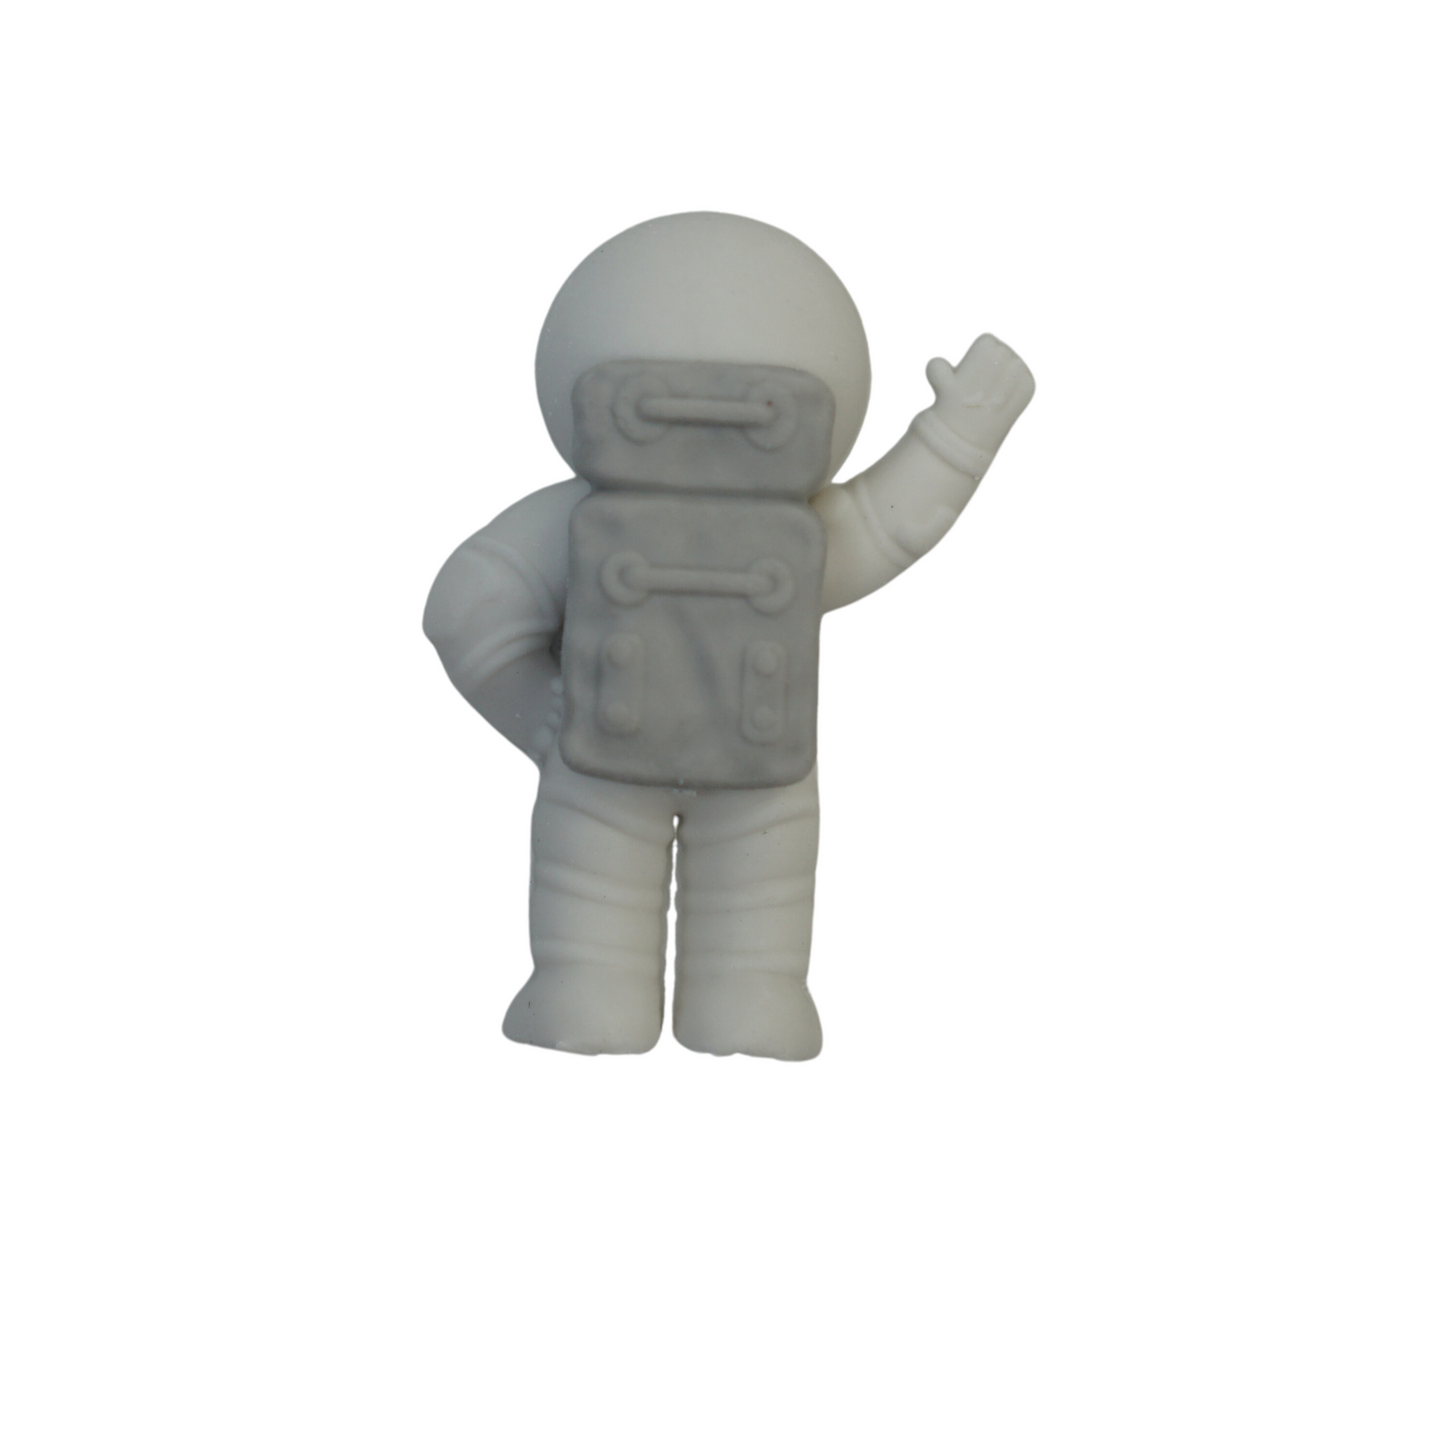 Mini Astronaut Space Eraser for Kids (3 Piece)